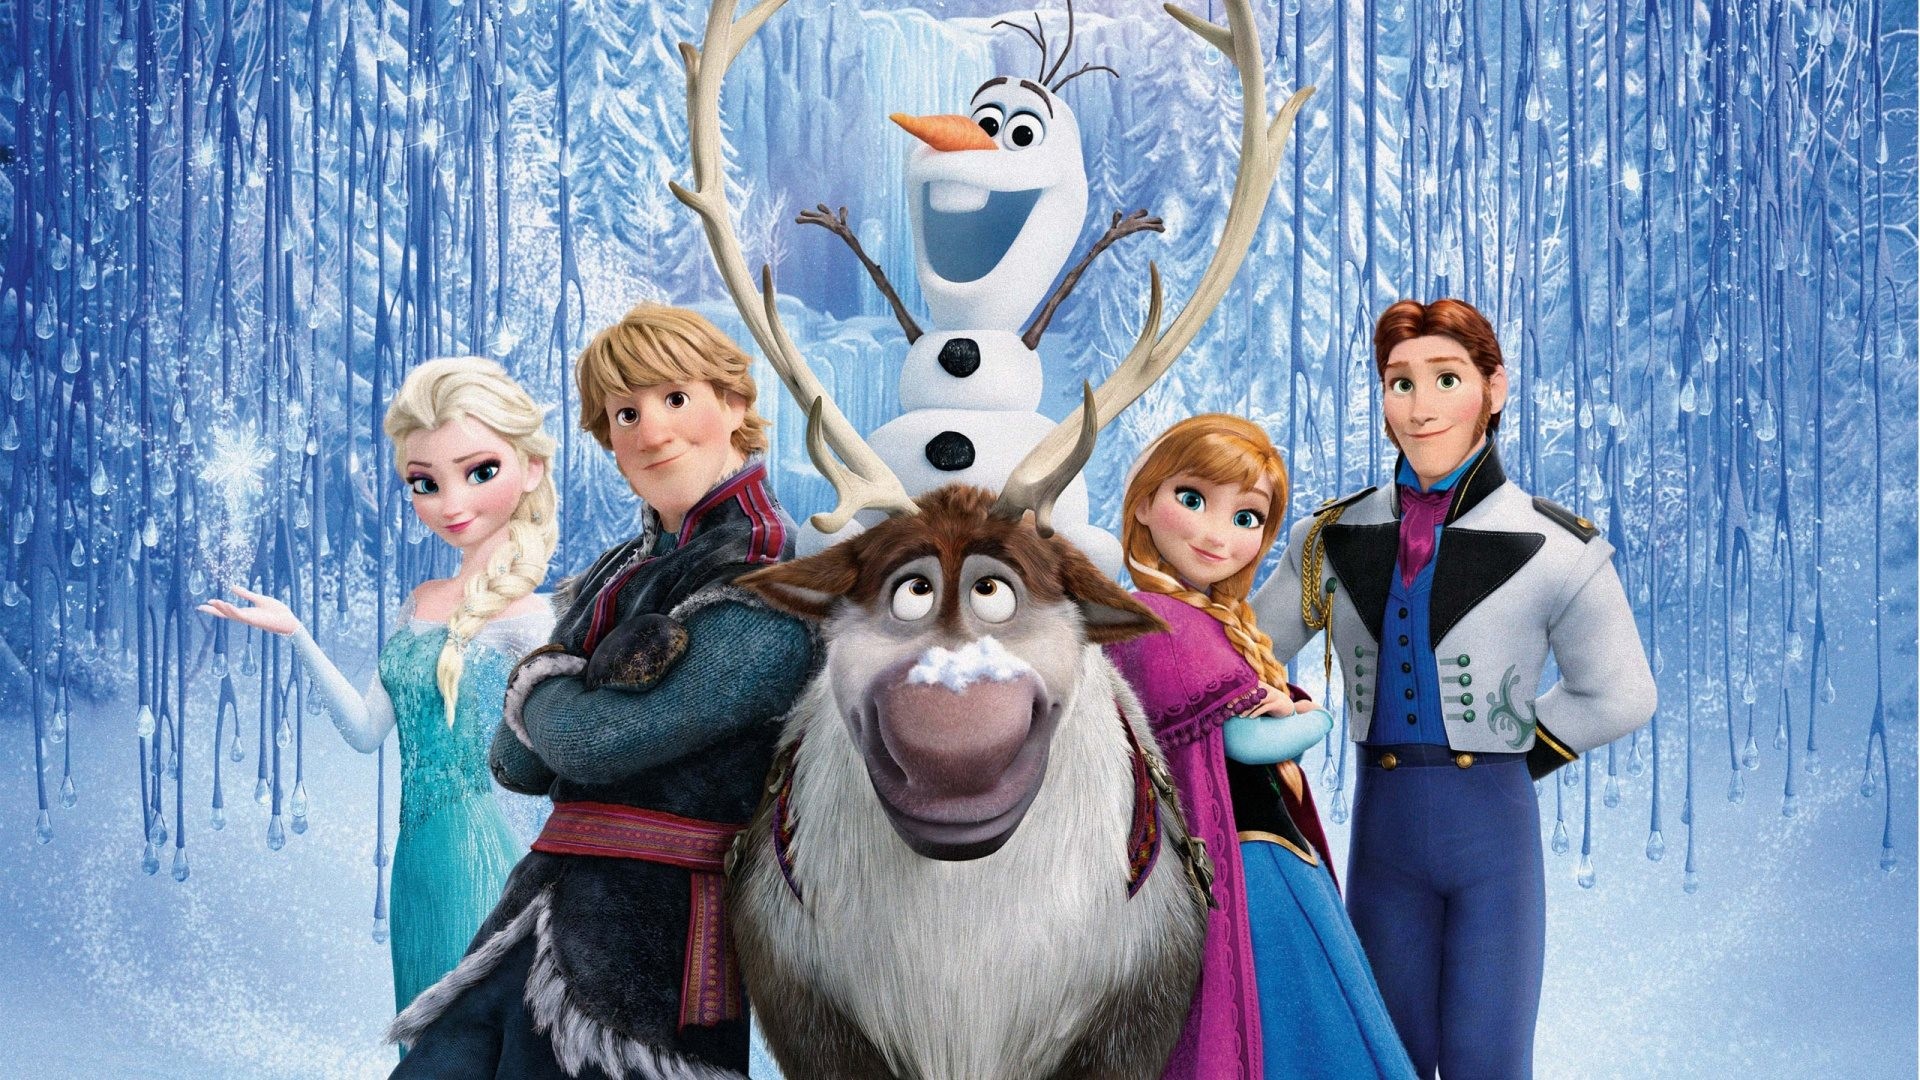 General 1920x1080 Frozen (movie) winter snow movies movie characters Elsa Olaf (Frozen) digital art Princess Anna Kristoff (Frozen)